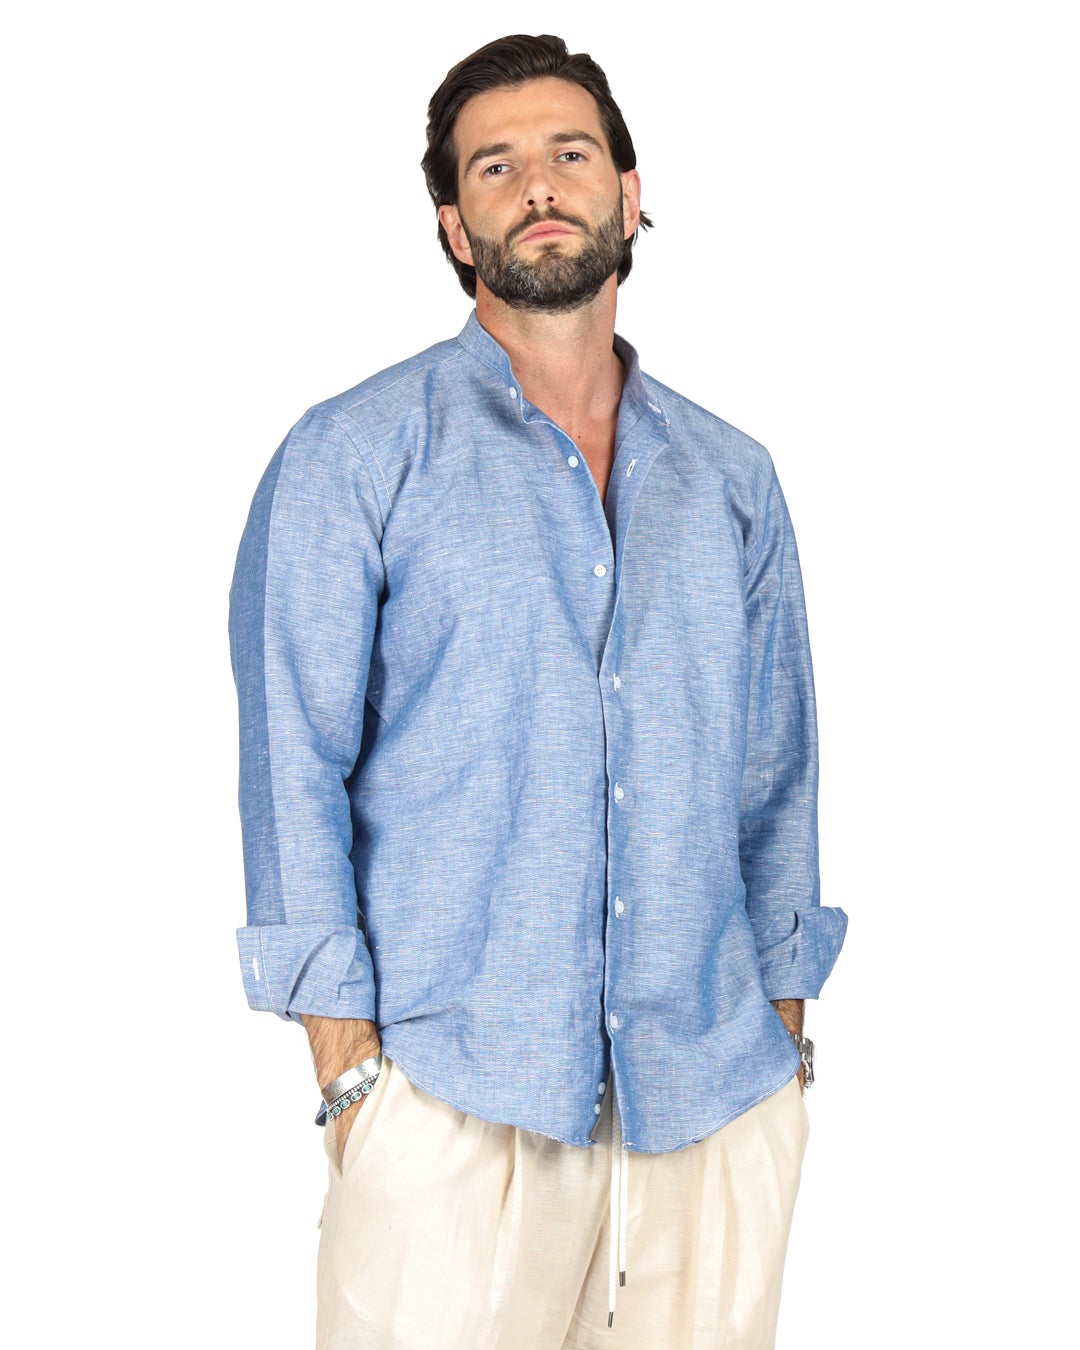 Positano - Korean linen denim shirt